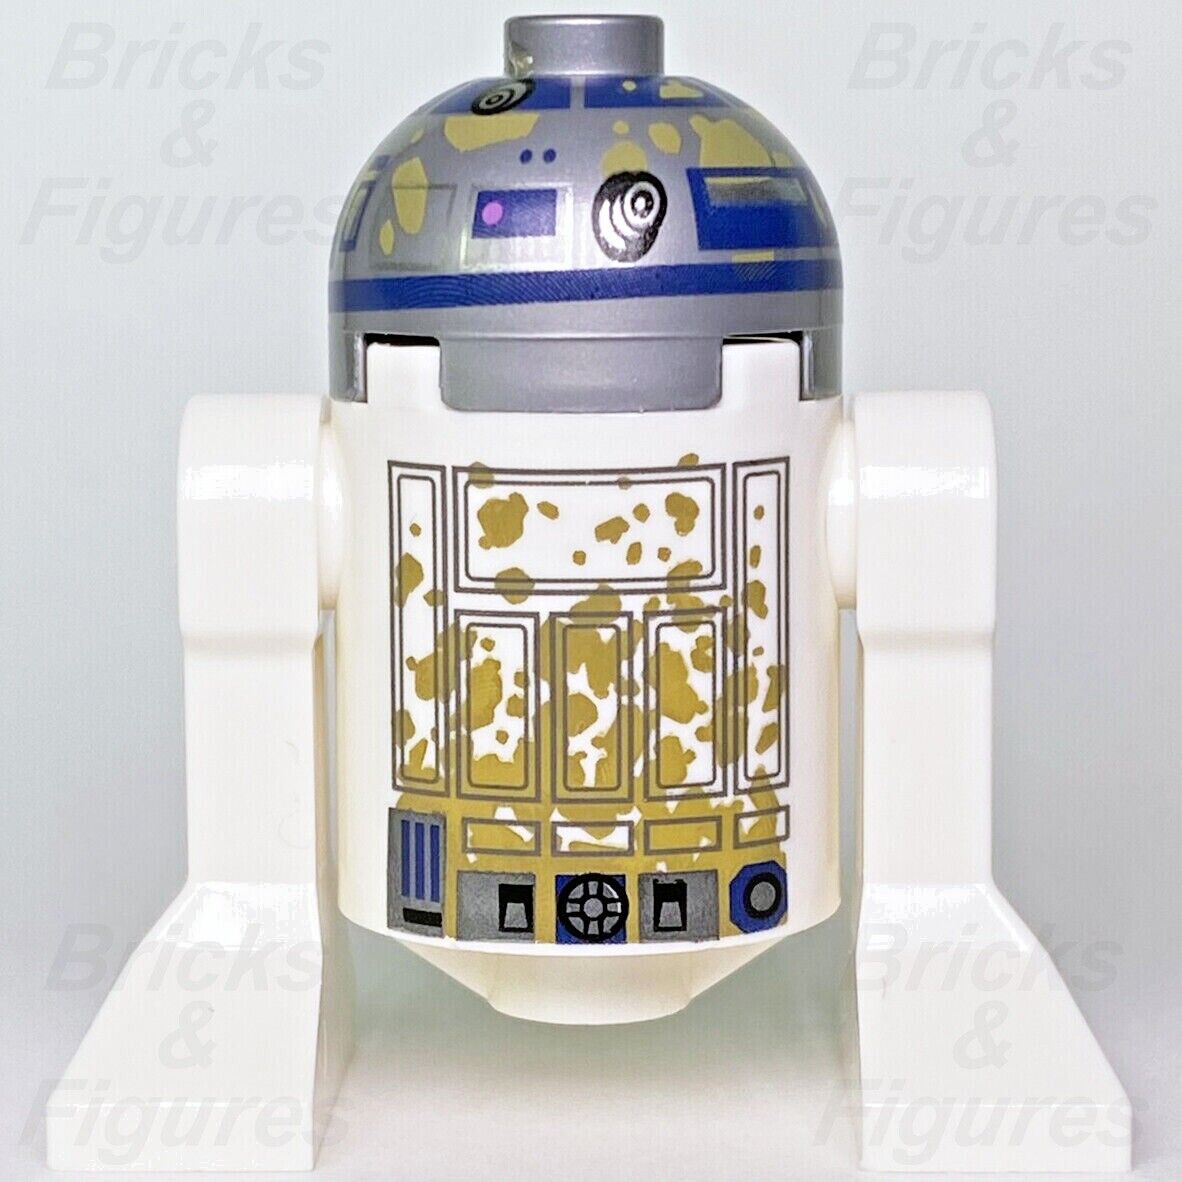 Star Wars LEGO R2-D2 Astromech Droid Printed Back Minifigure 75330 sw1200 New - Bricks & Figures